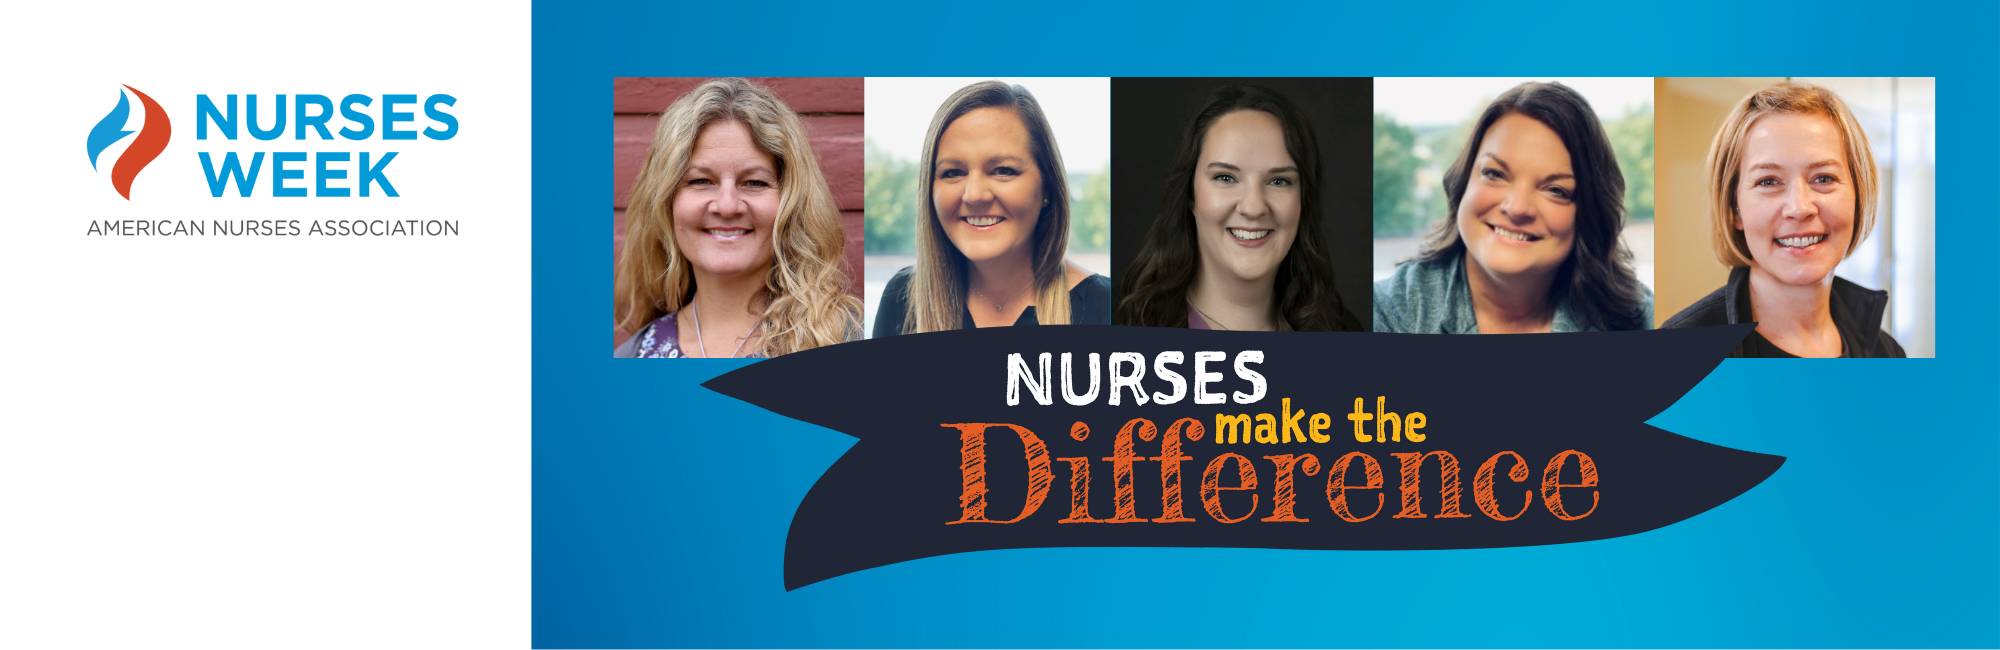 A collage of five nurses